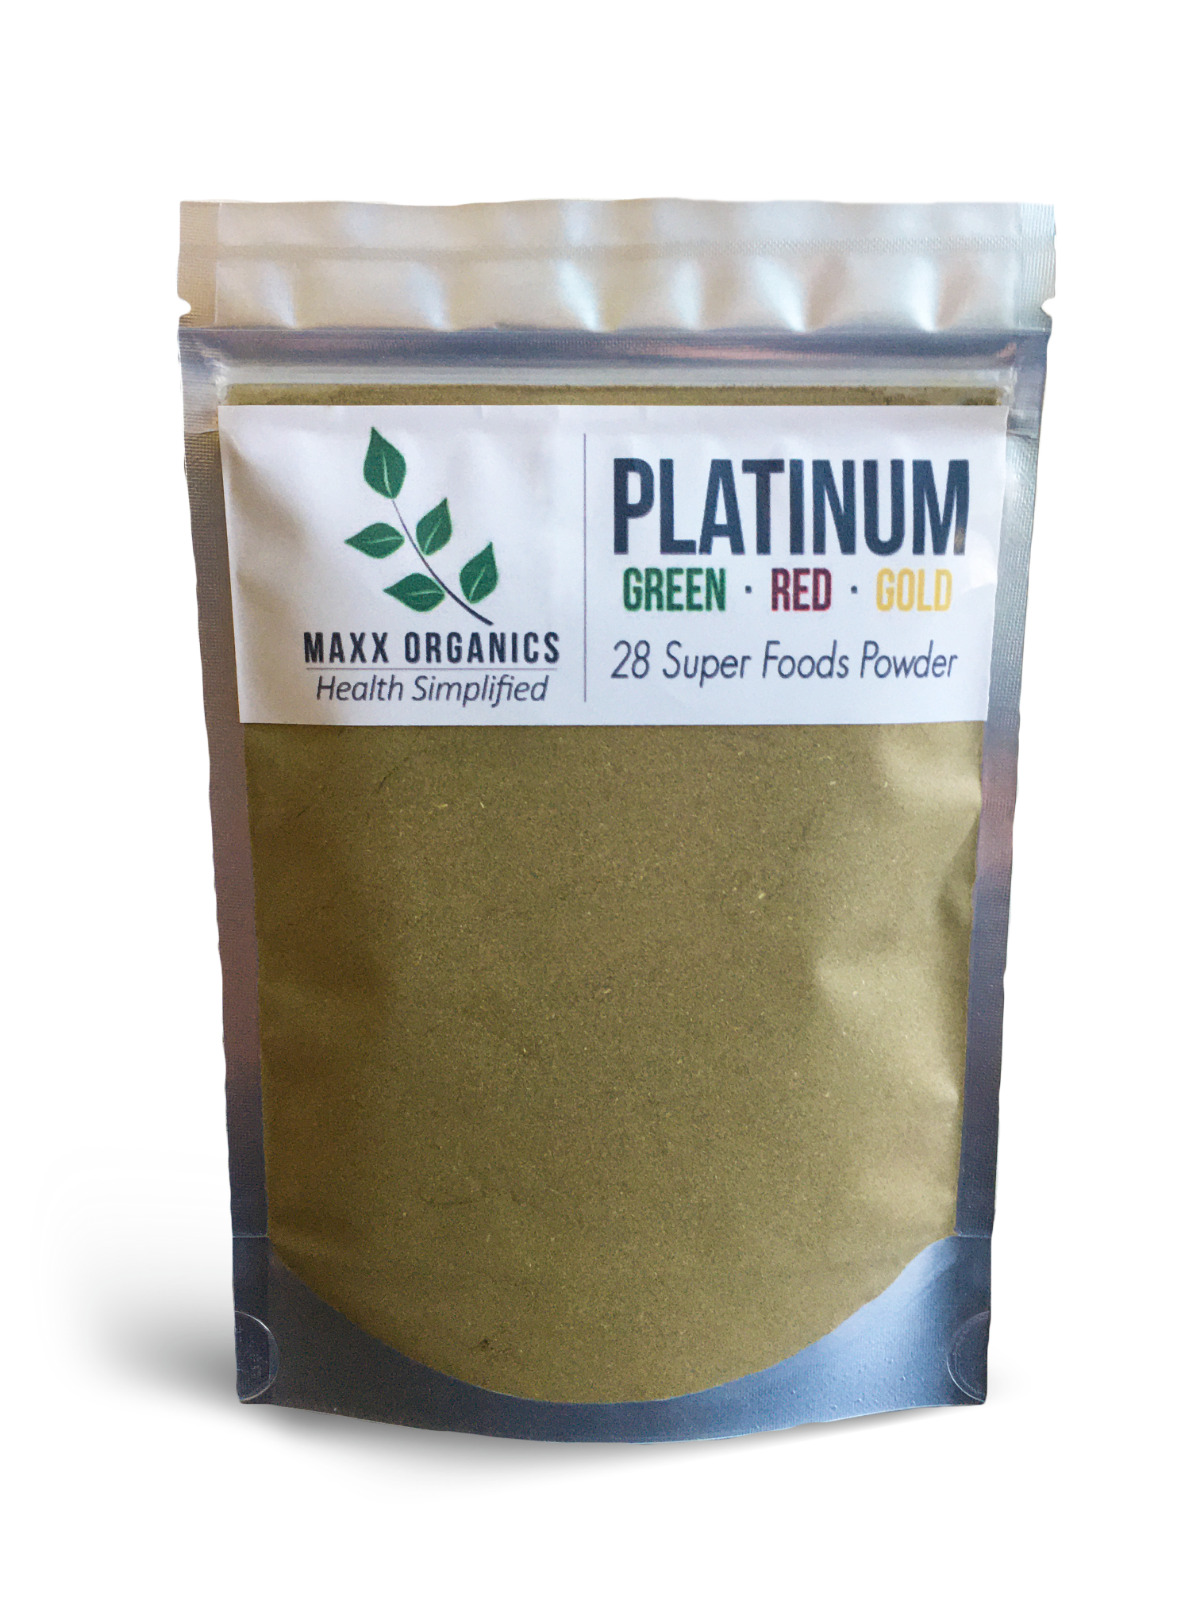 MAXX Organics PLATINUM Green Gold, Reds SUPERFOODS POWDER Compare Organifi Juice